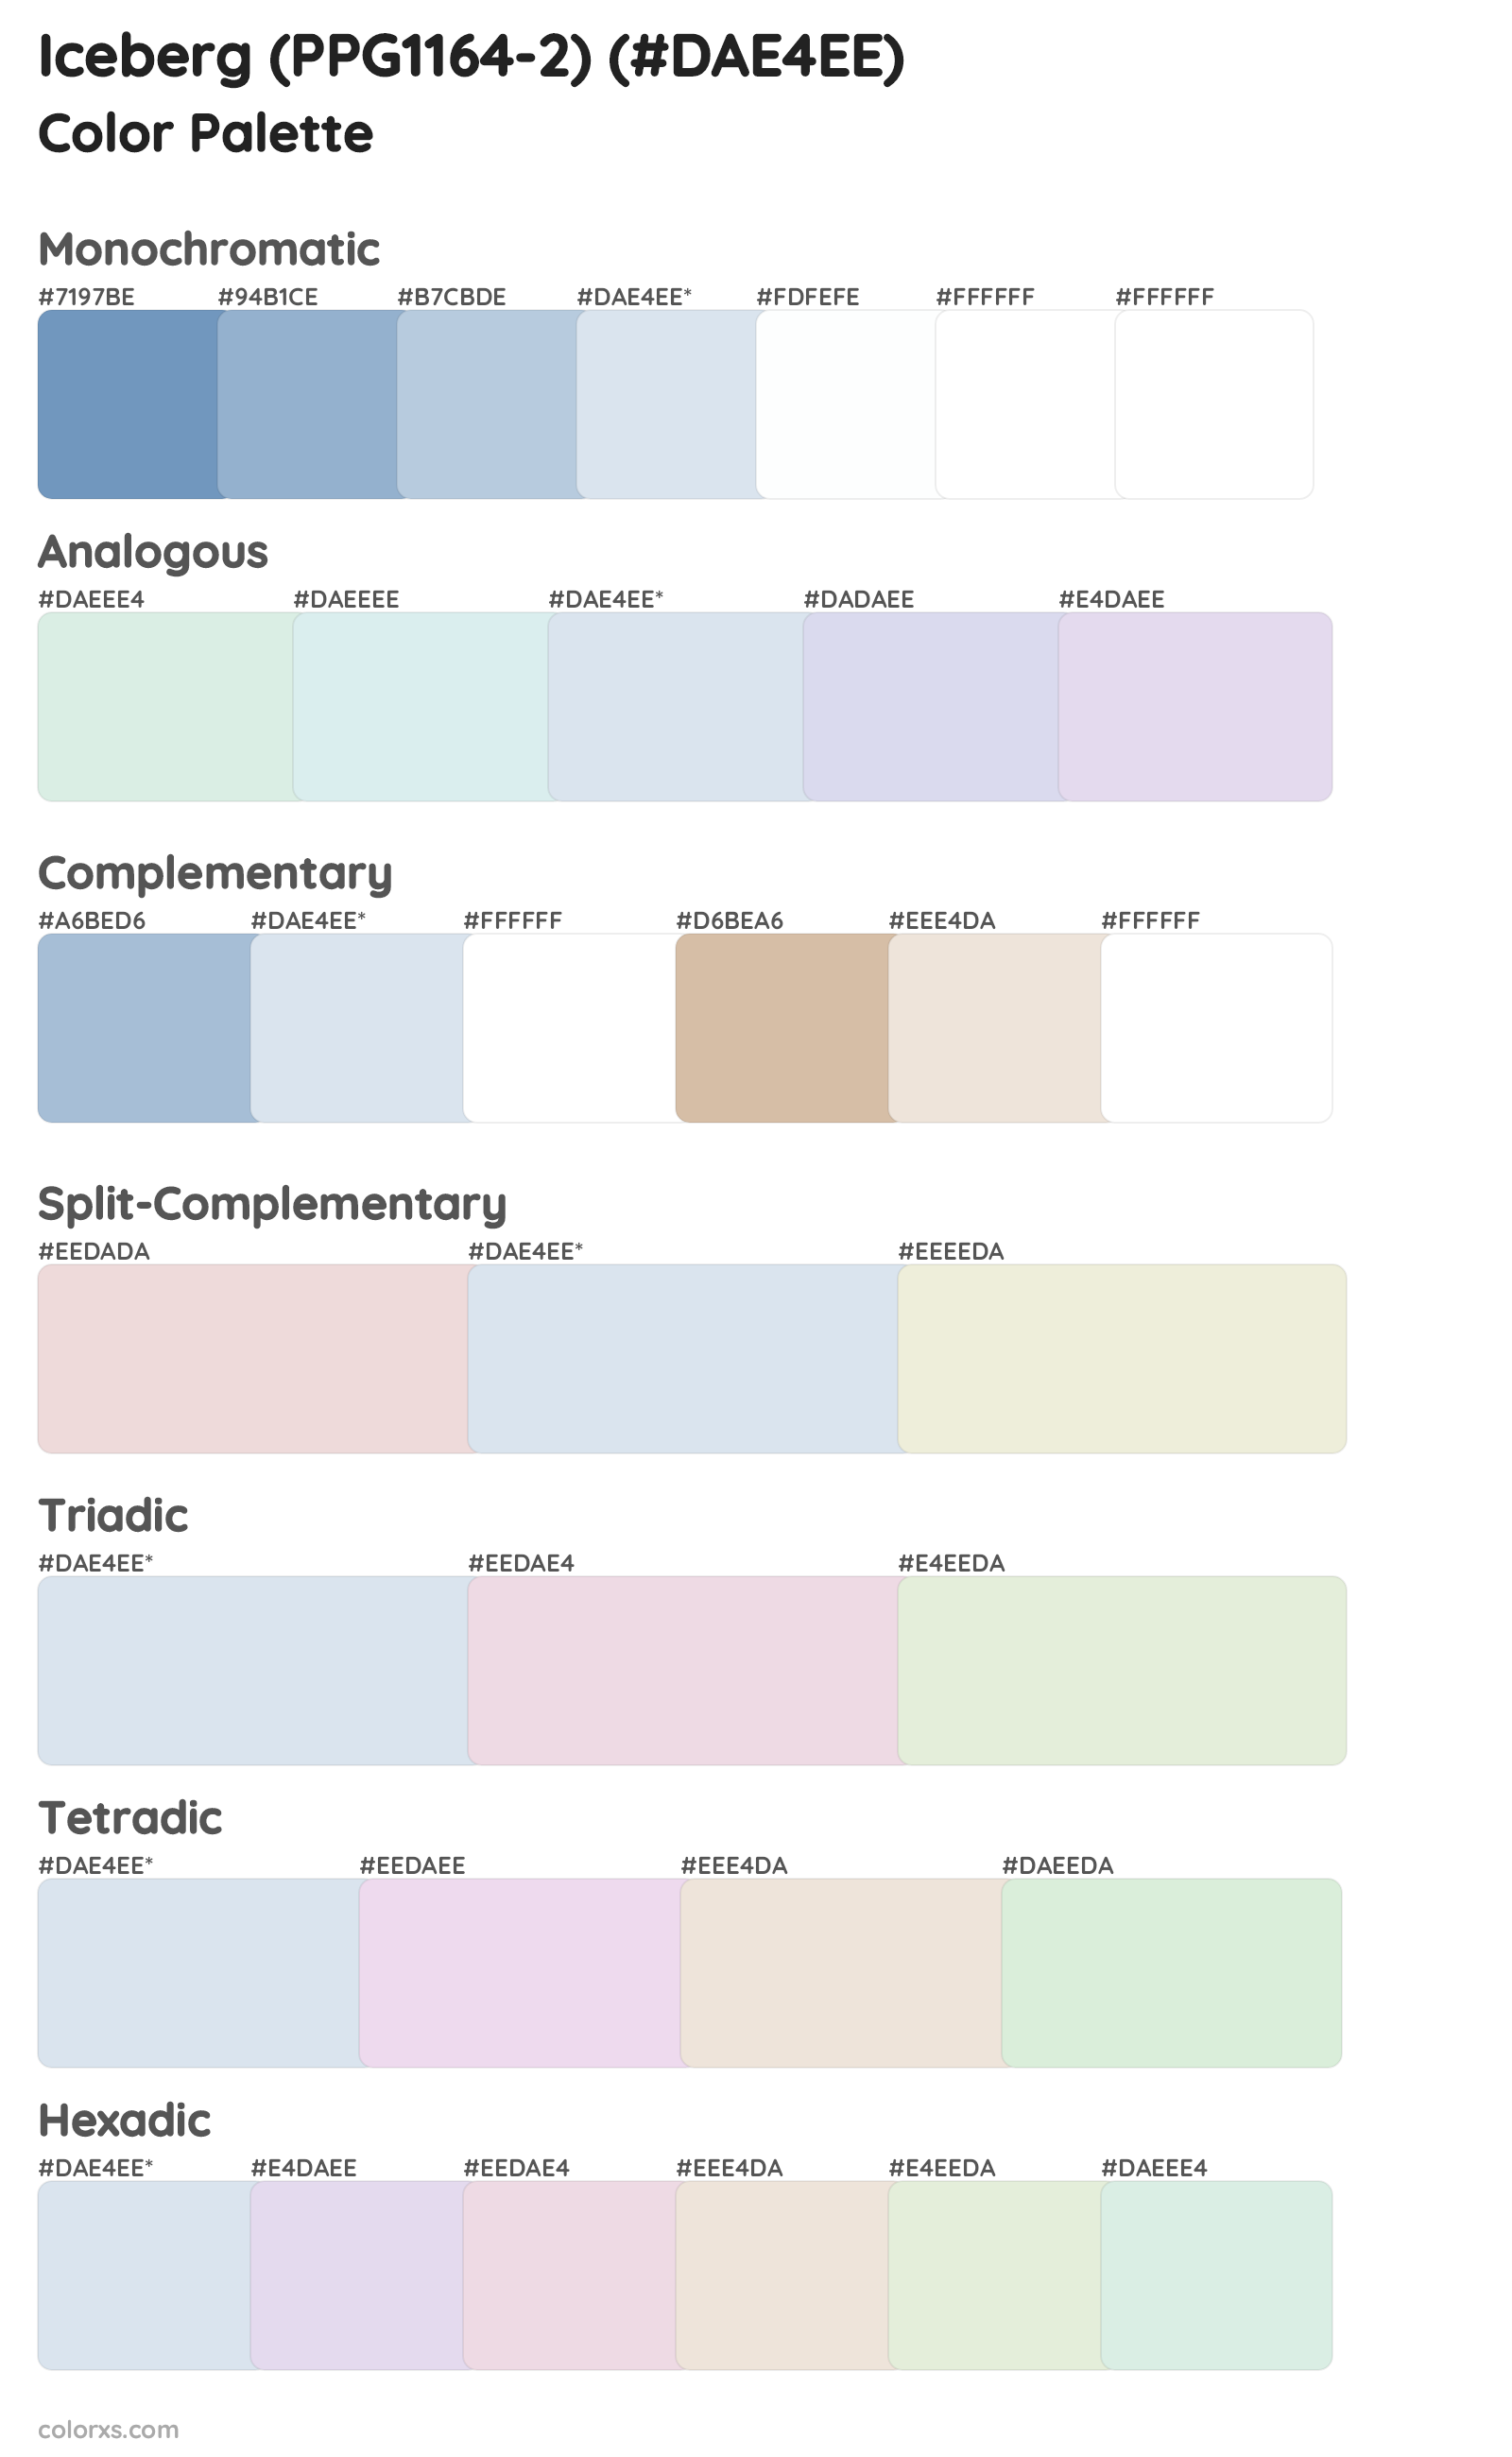 Iceberg (PPG1164-2) Color Scheme Palettes